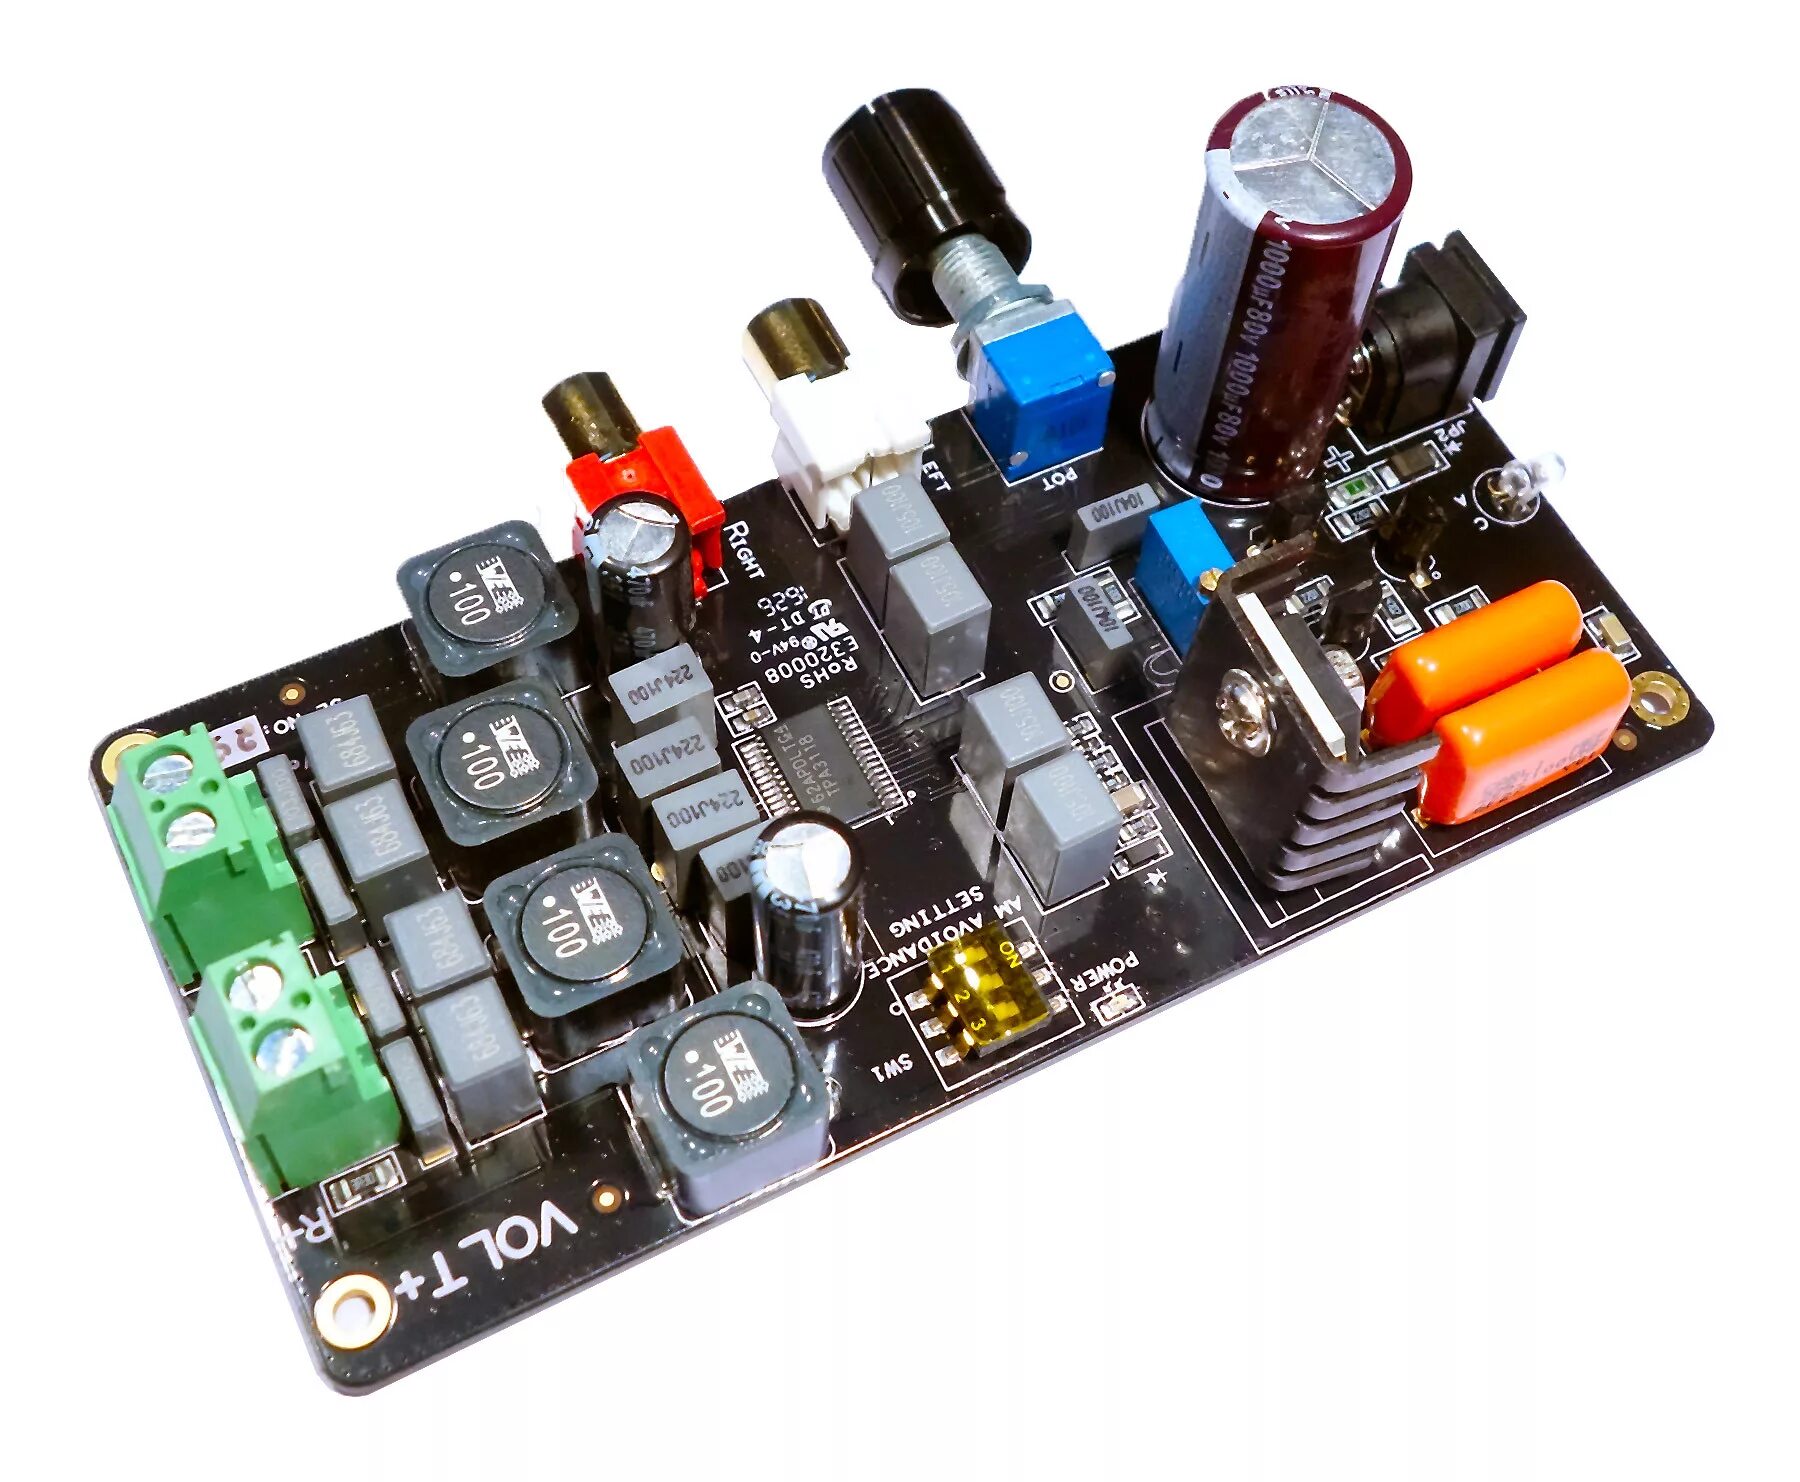 Amps volt. Class d Amplifier 50 vatt SOP. Amplifier d1710. Class d hy1720. L6387d усилитель.